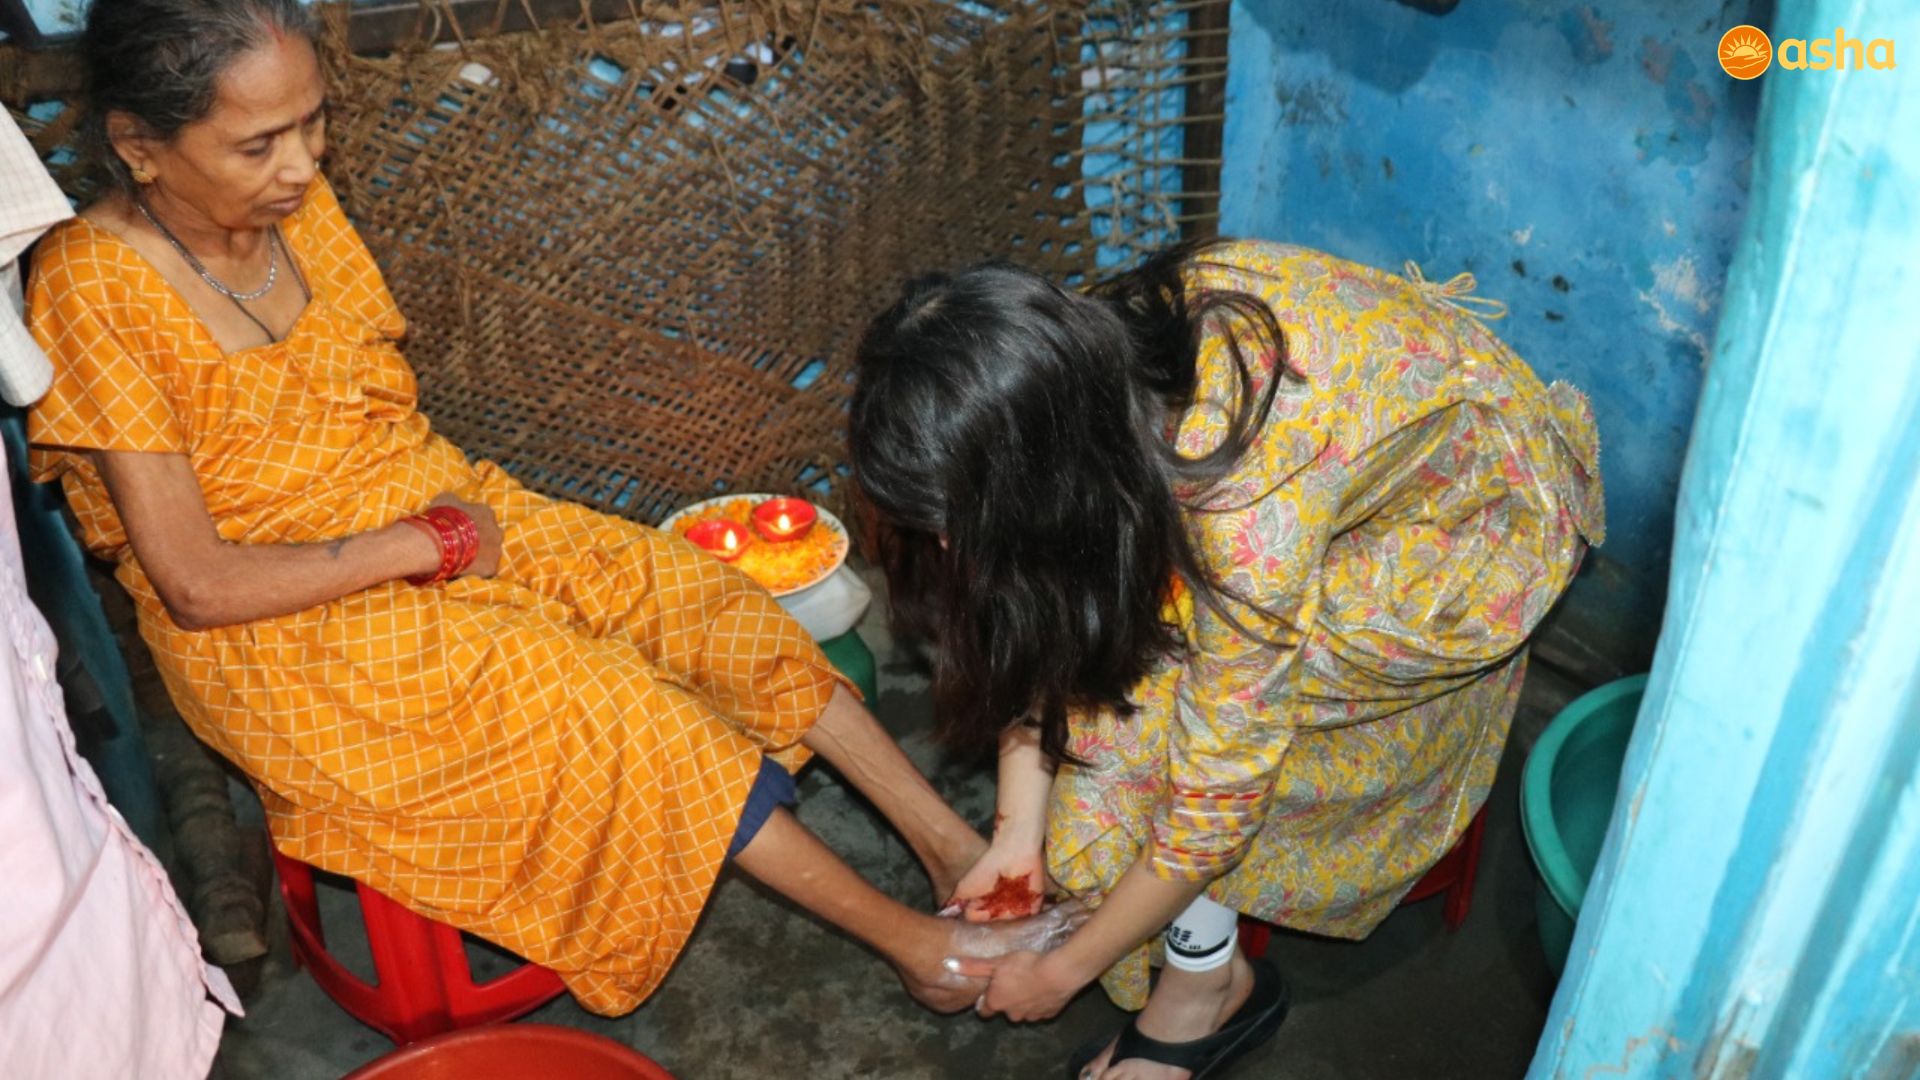 Julianna, Asha volunteer from Boston, tenderly Washes the feet of an Elderly Woman at her Small Shanty in Zakhira Slum Community